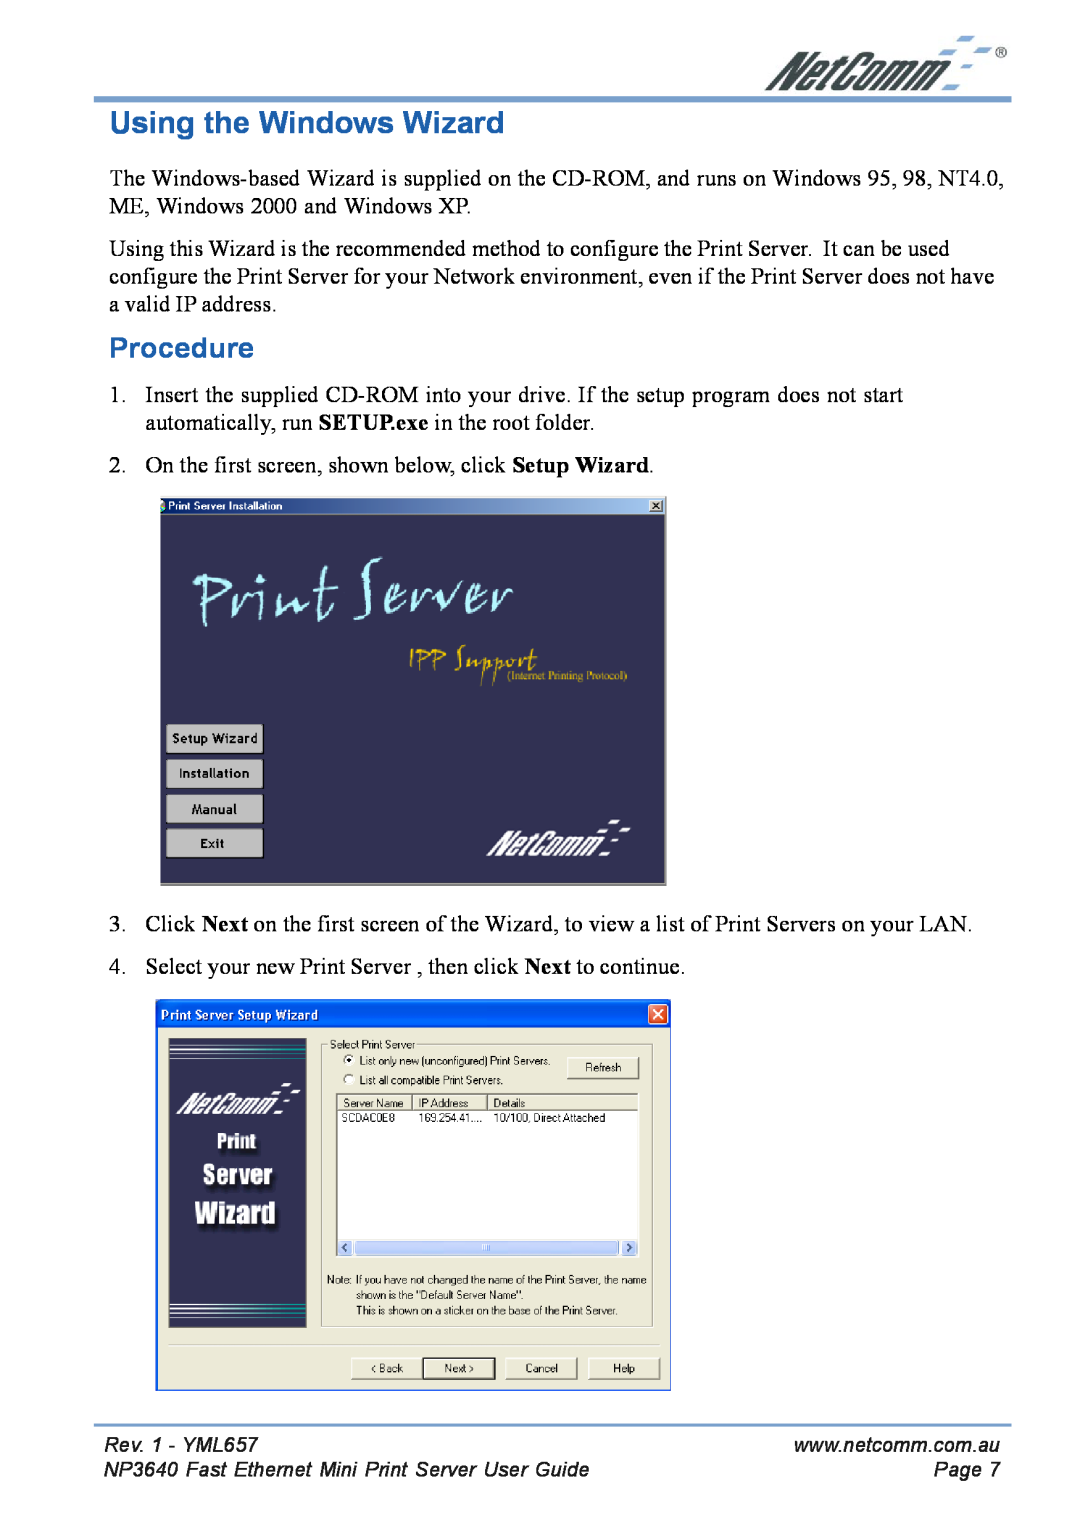 NetComm NP3640 manual Using the Windows Wizard, Procedure 